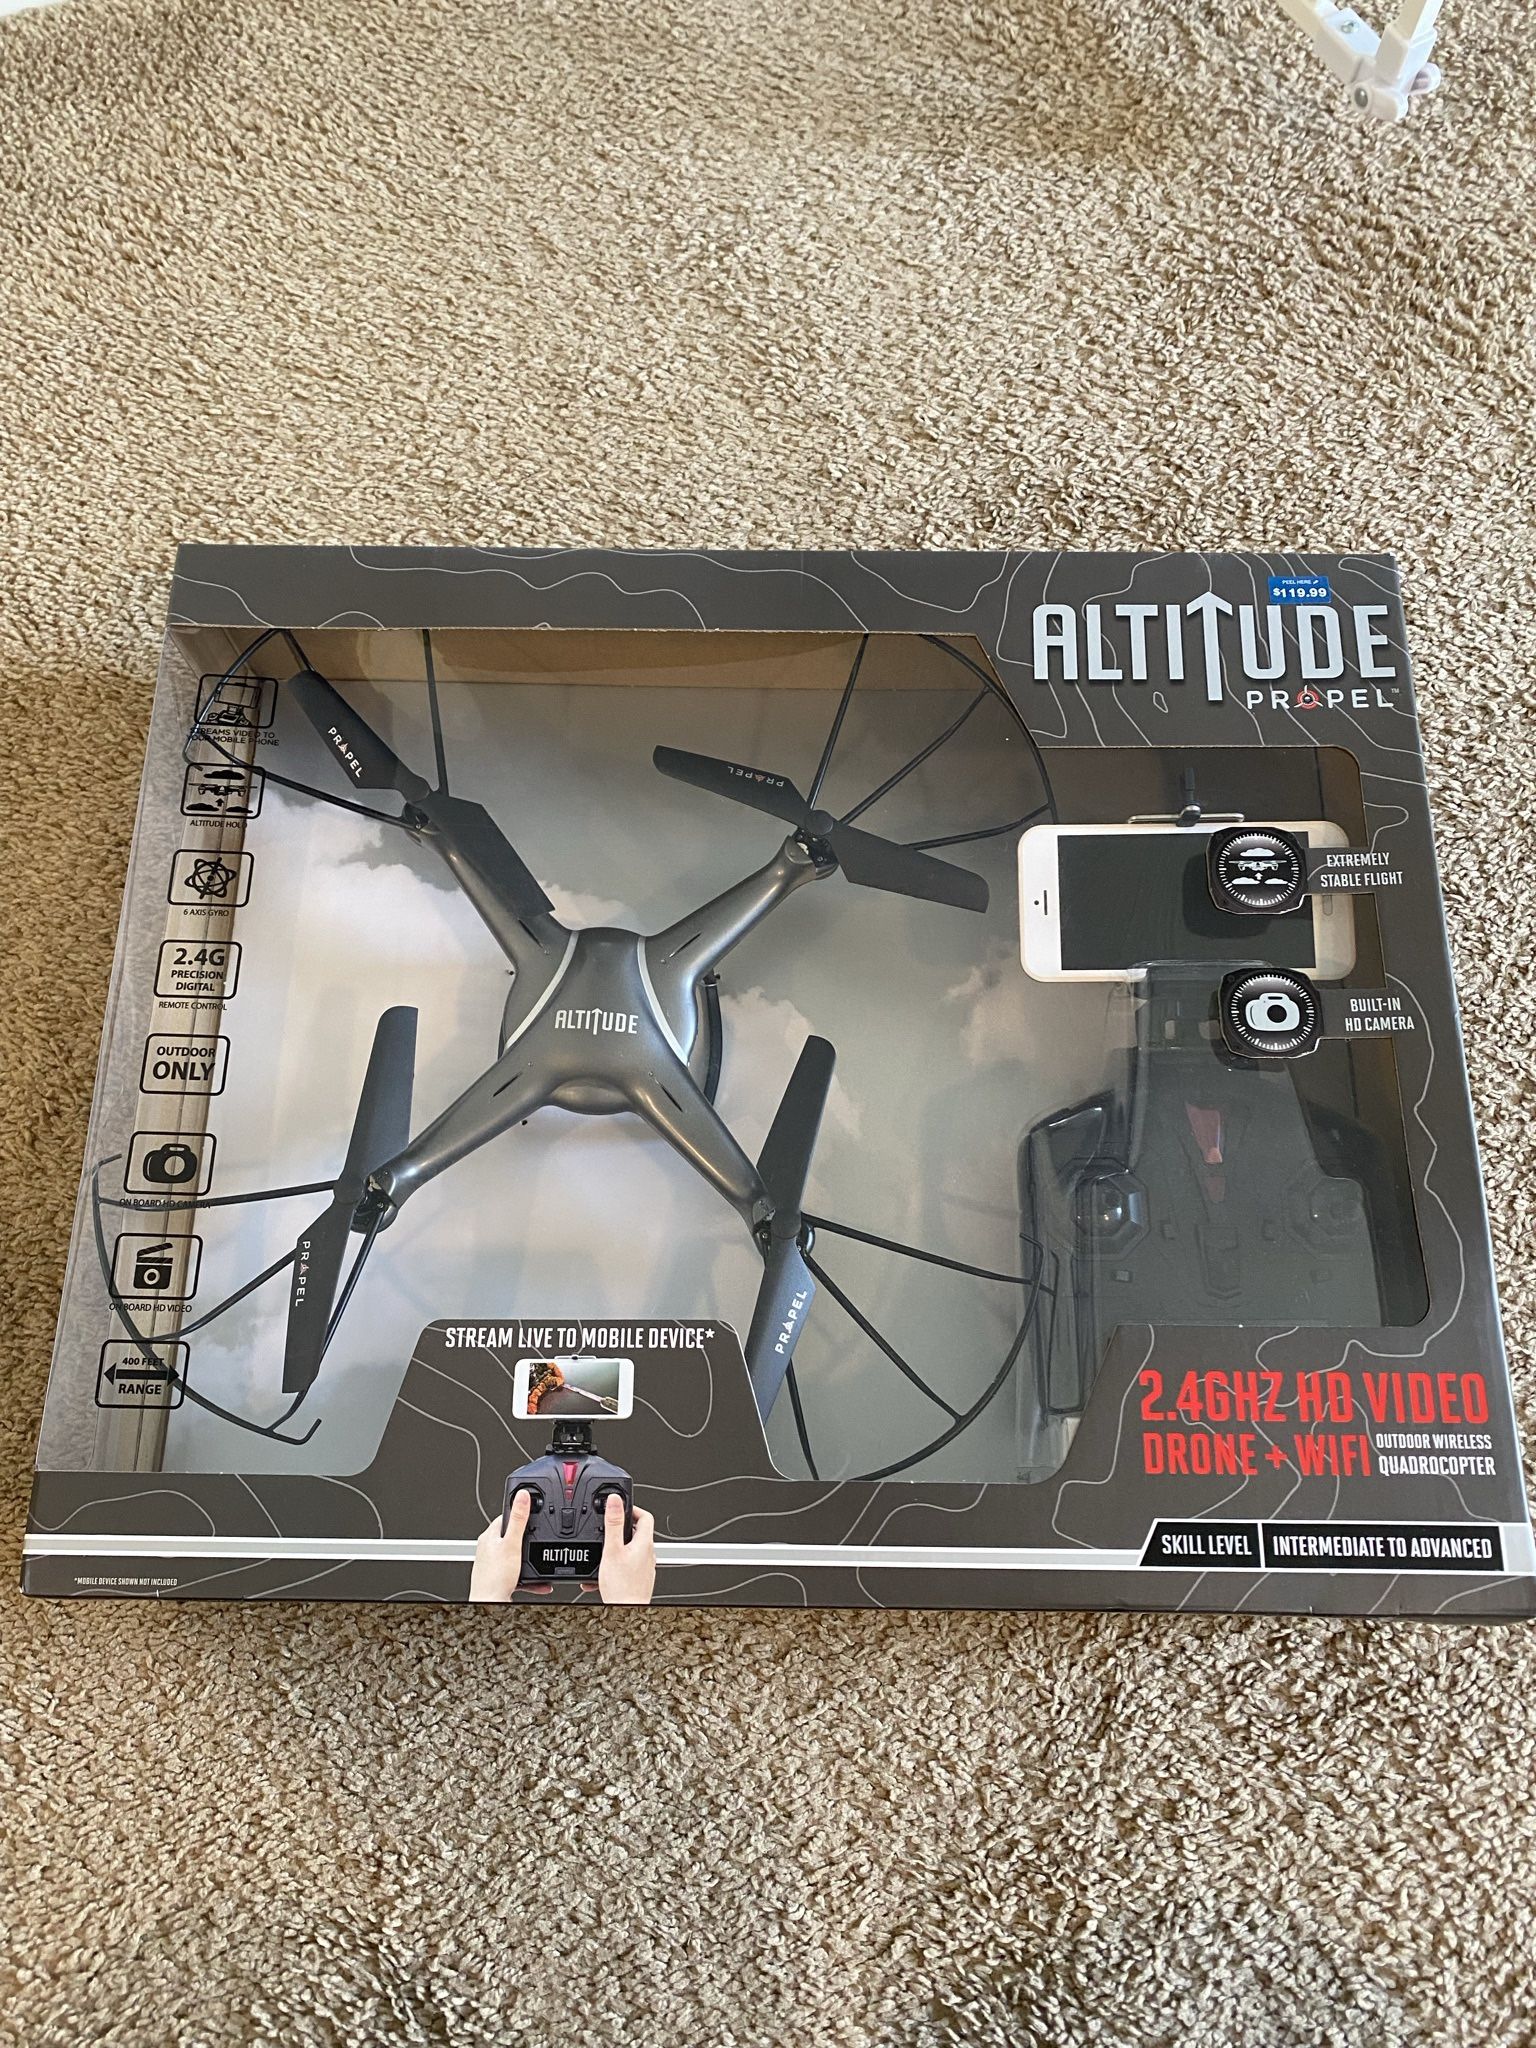 Altitude Propel Drone 